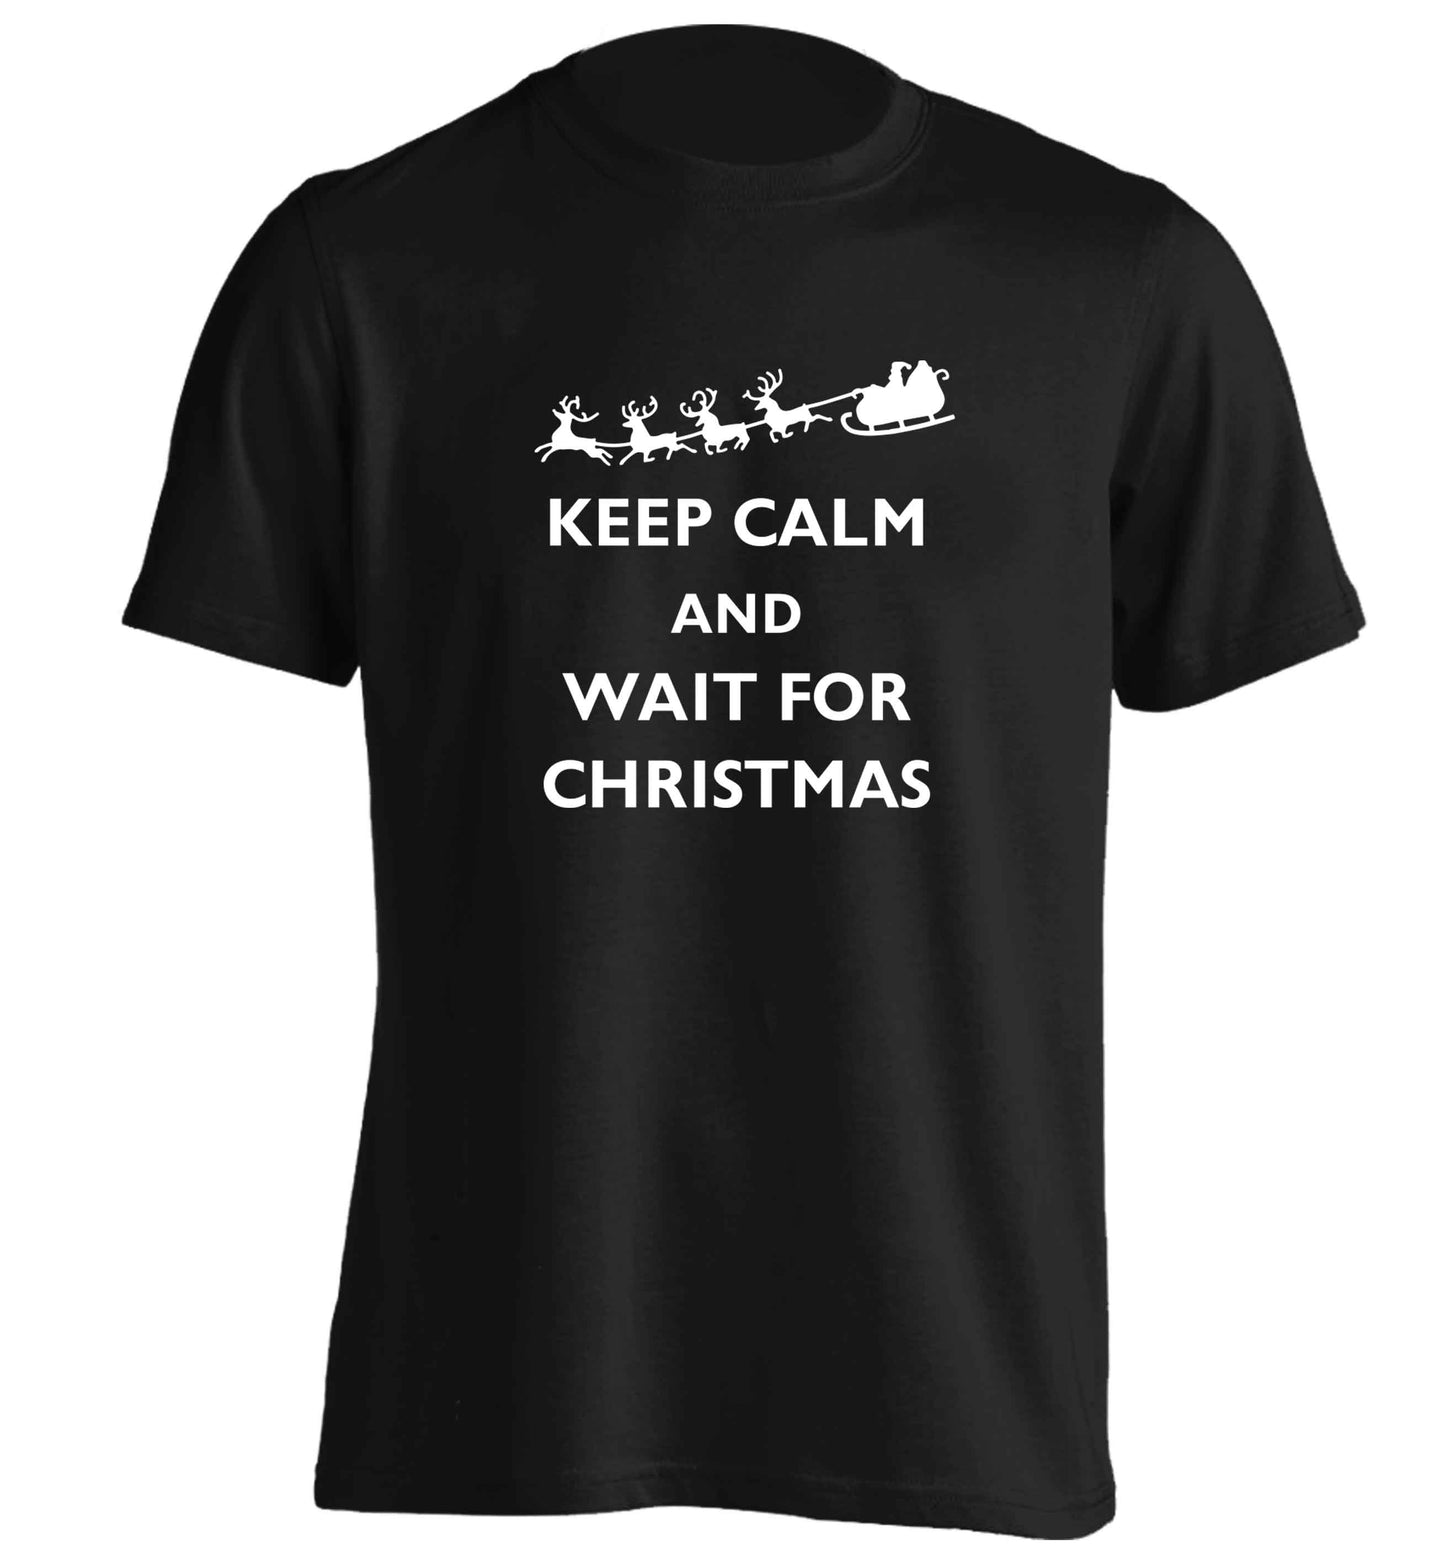 Keep calm and wait for Christmas adults unisex black Tshirt 2XL